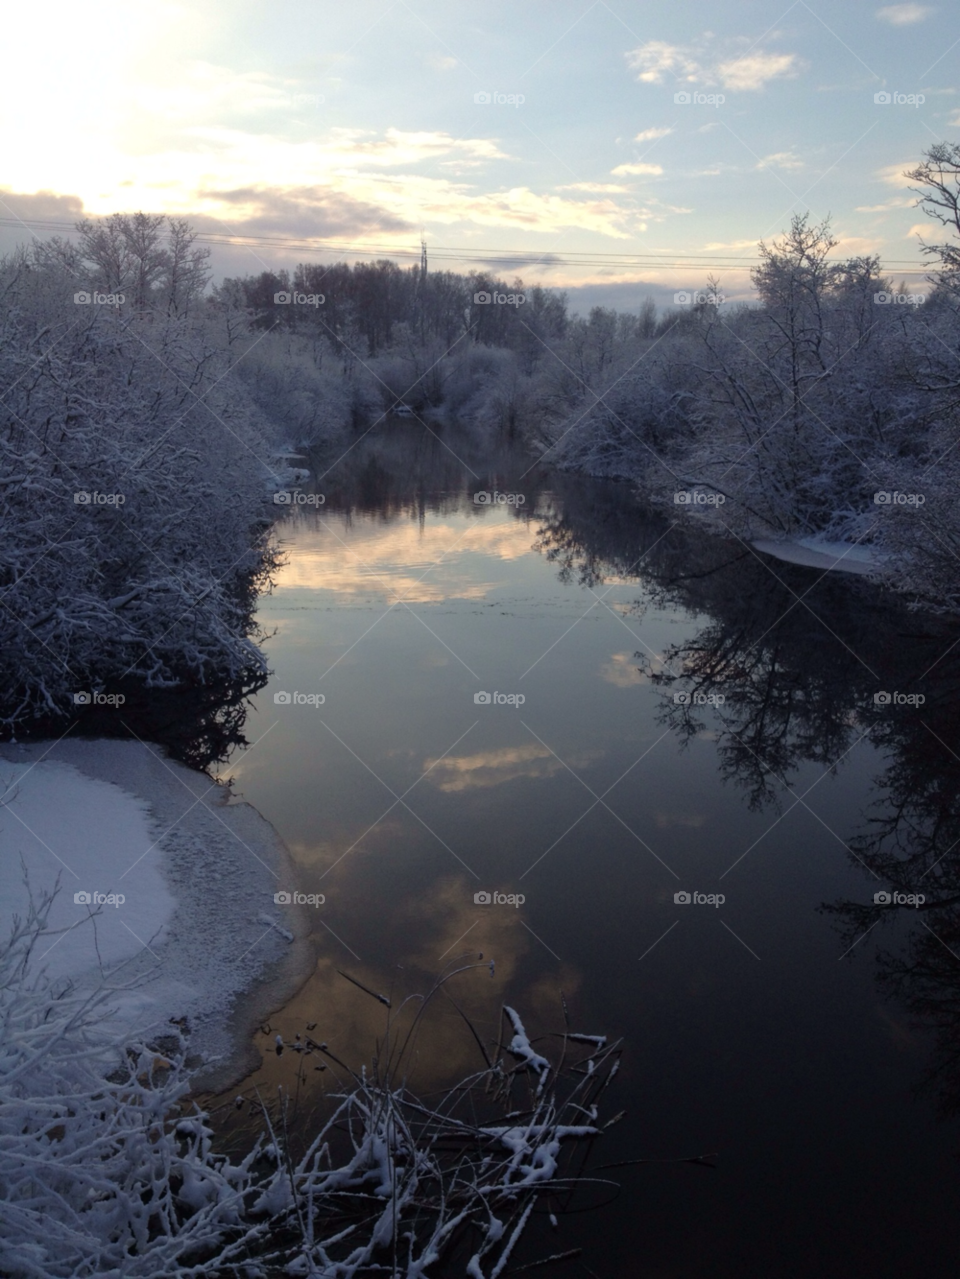 brogetorp in flen sweden winter river december by eloranta